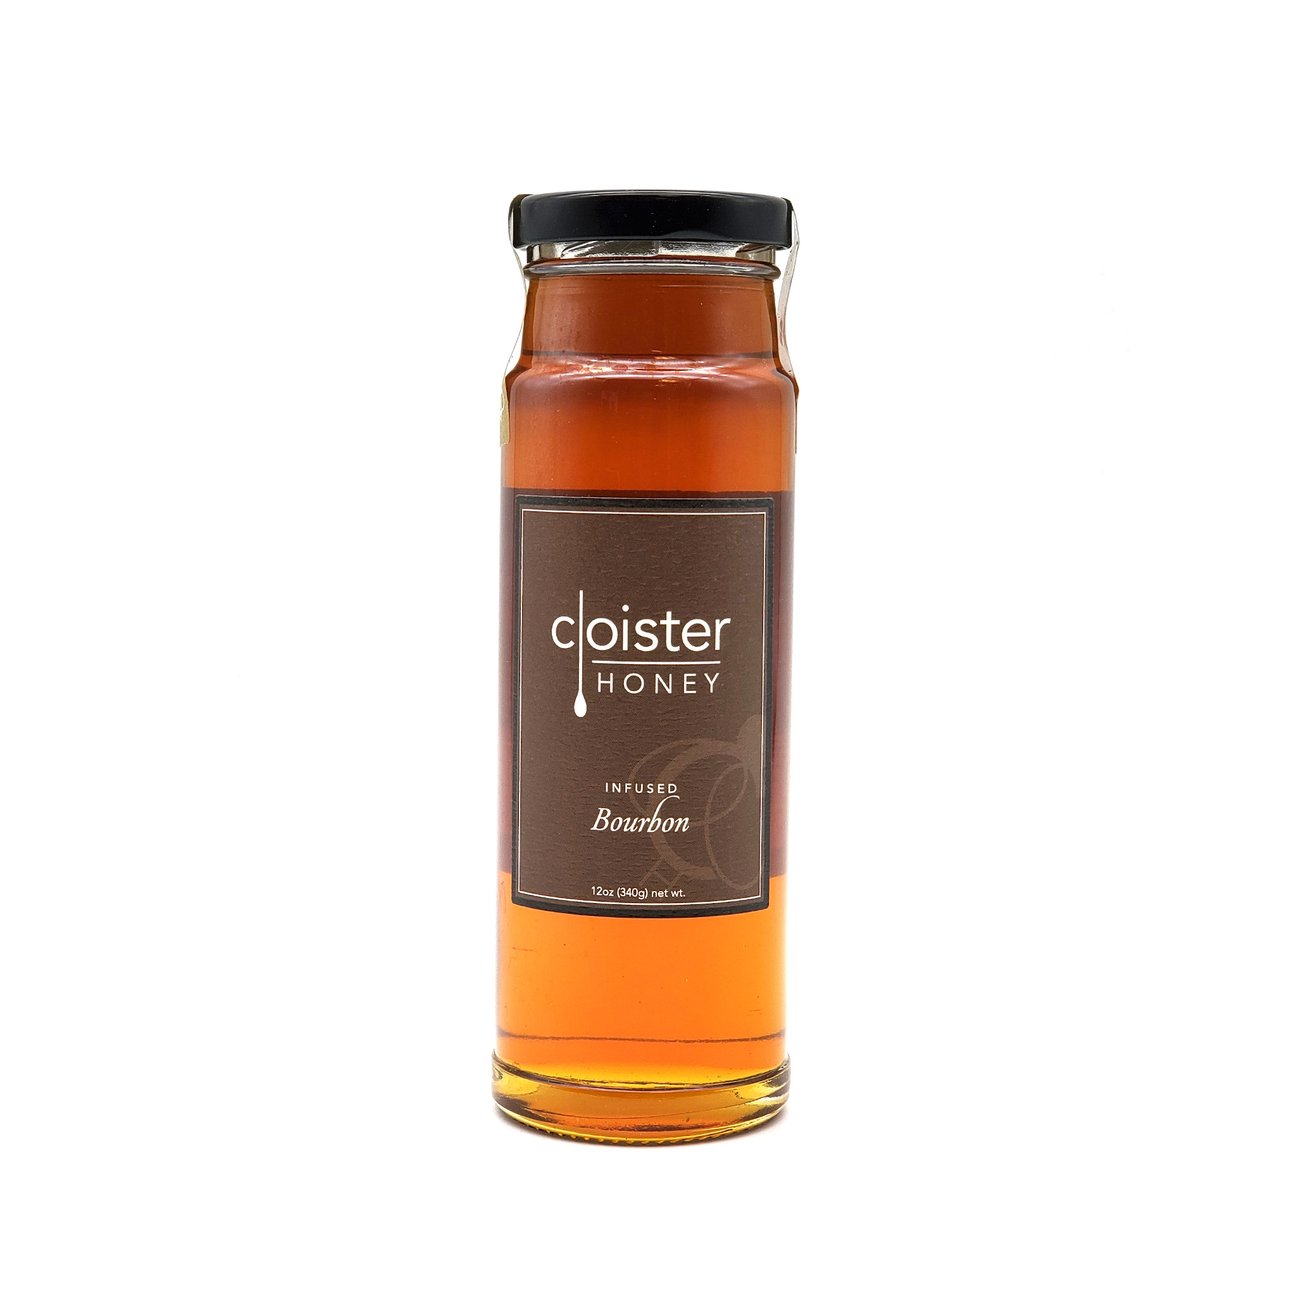 Cloister Honey 12oz